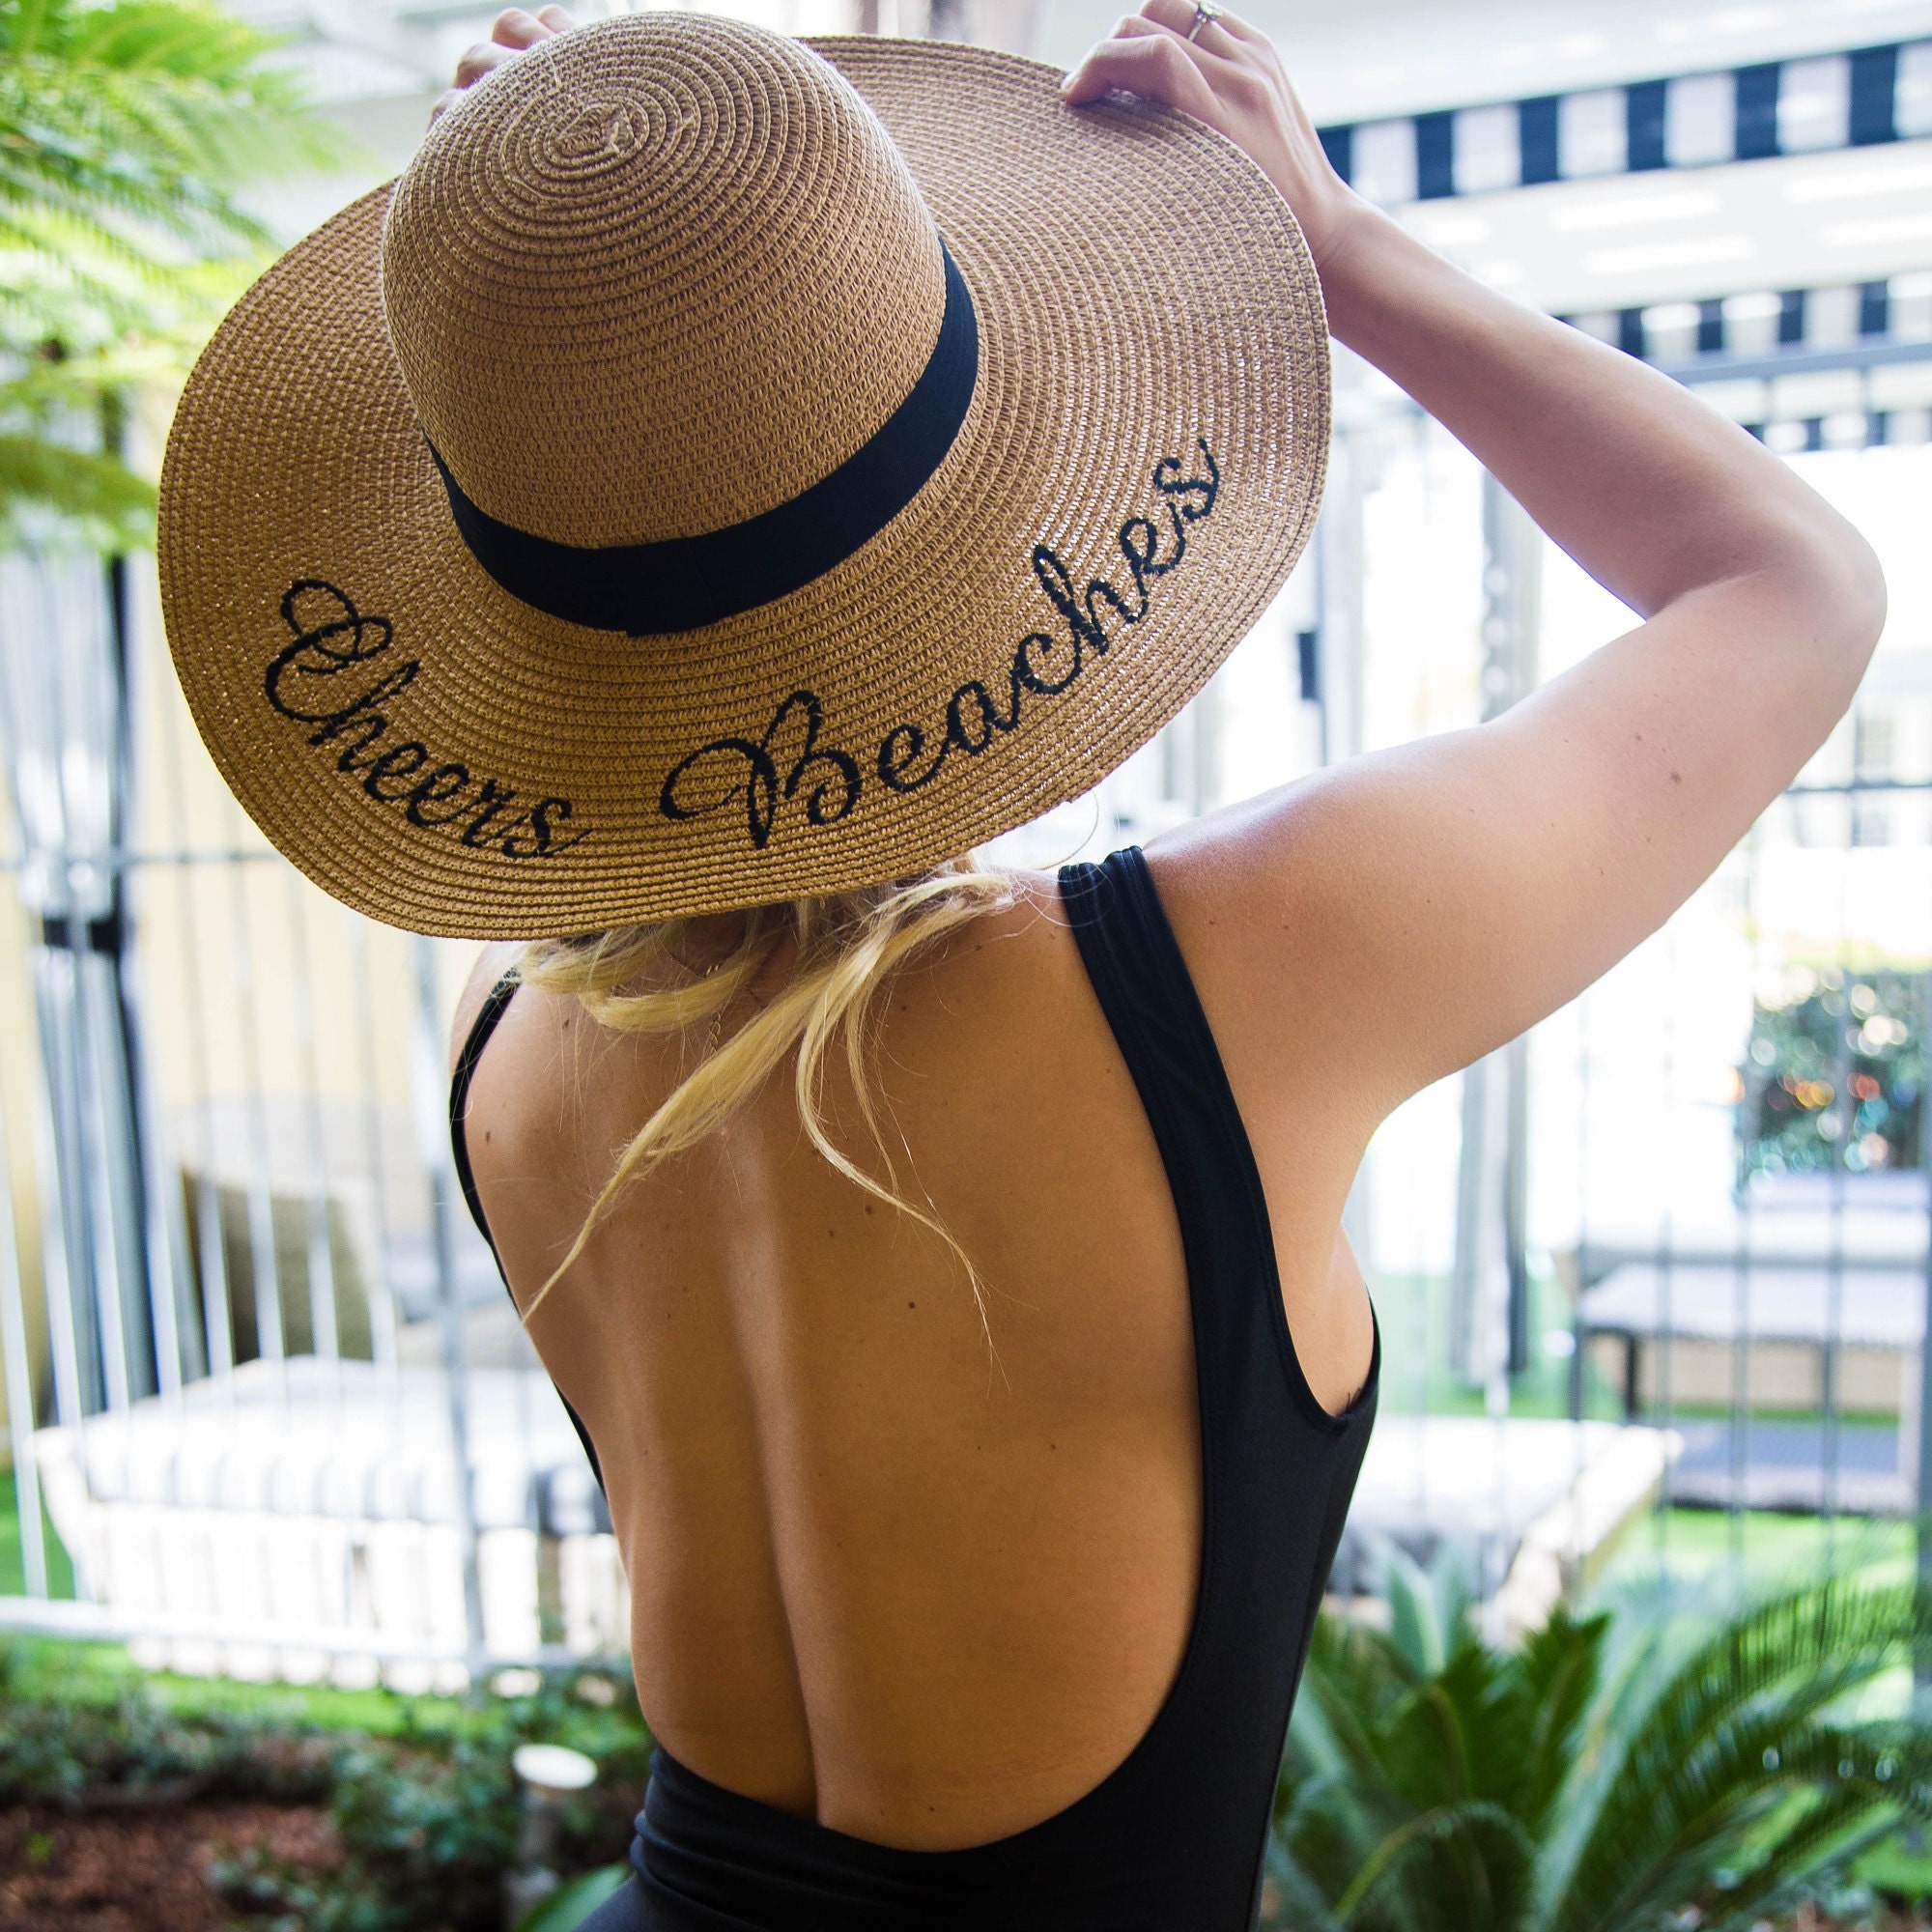 Cheers Beaches® Floppy Sun Hats